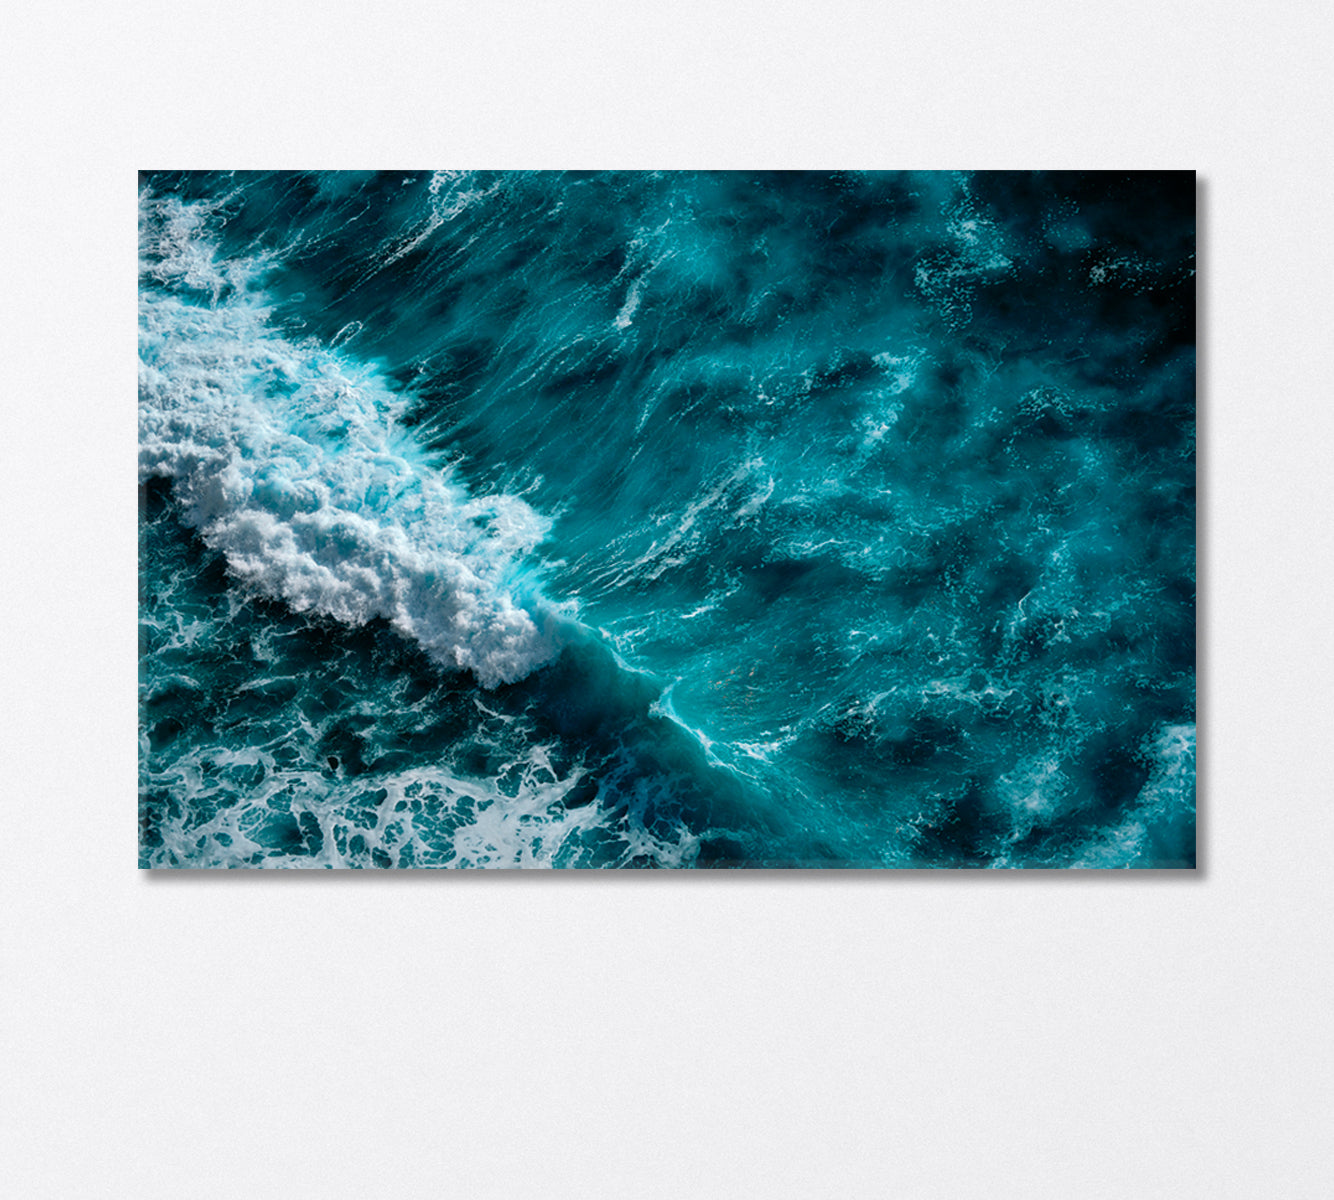 Seething Foamy Ocean Waves Canvas Print-Canvas Print-CetArt-1 Panel-24x16 inches-CetArt